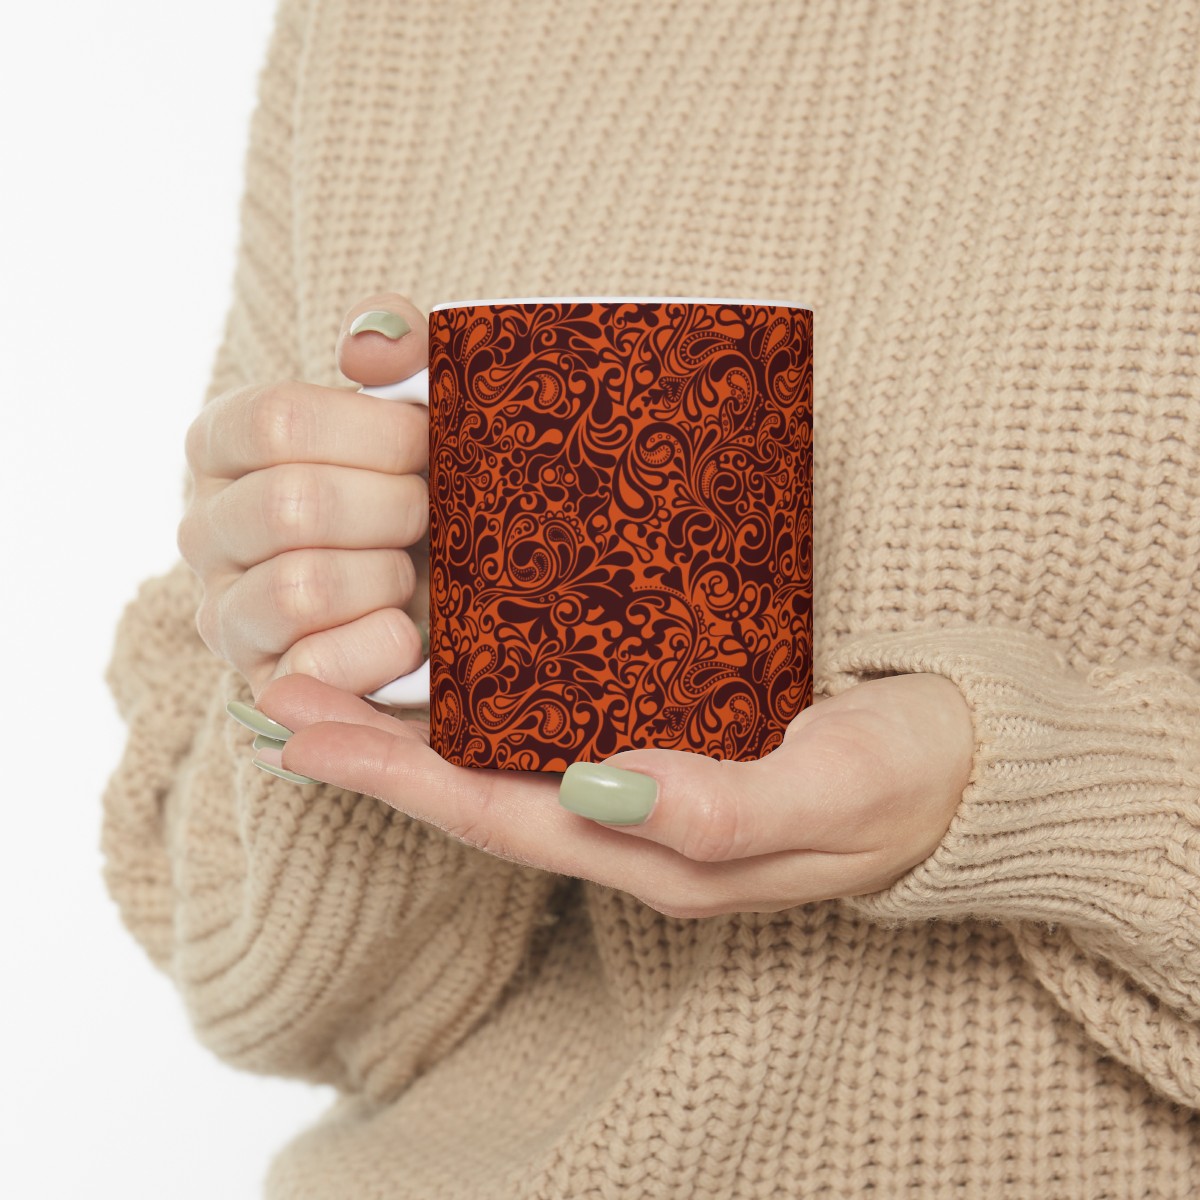 Ceramic Mug Orange Brown Floral product thumbnail image